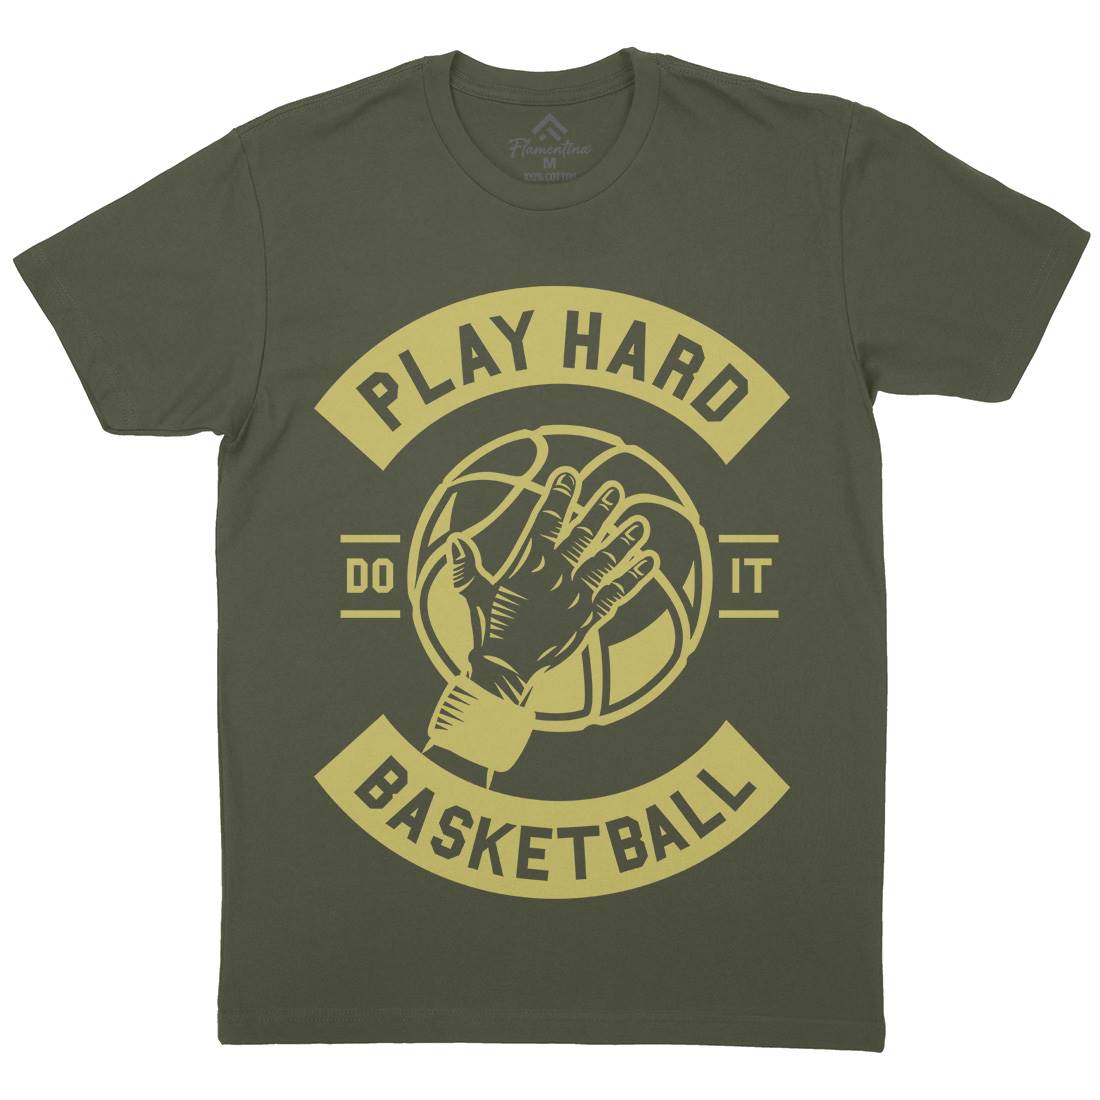 Play Hard Basketball Mens Organic Crew Neck T-Shirt Sport A261